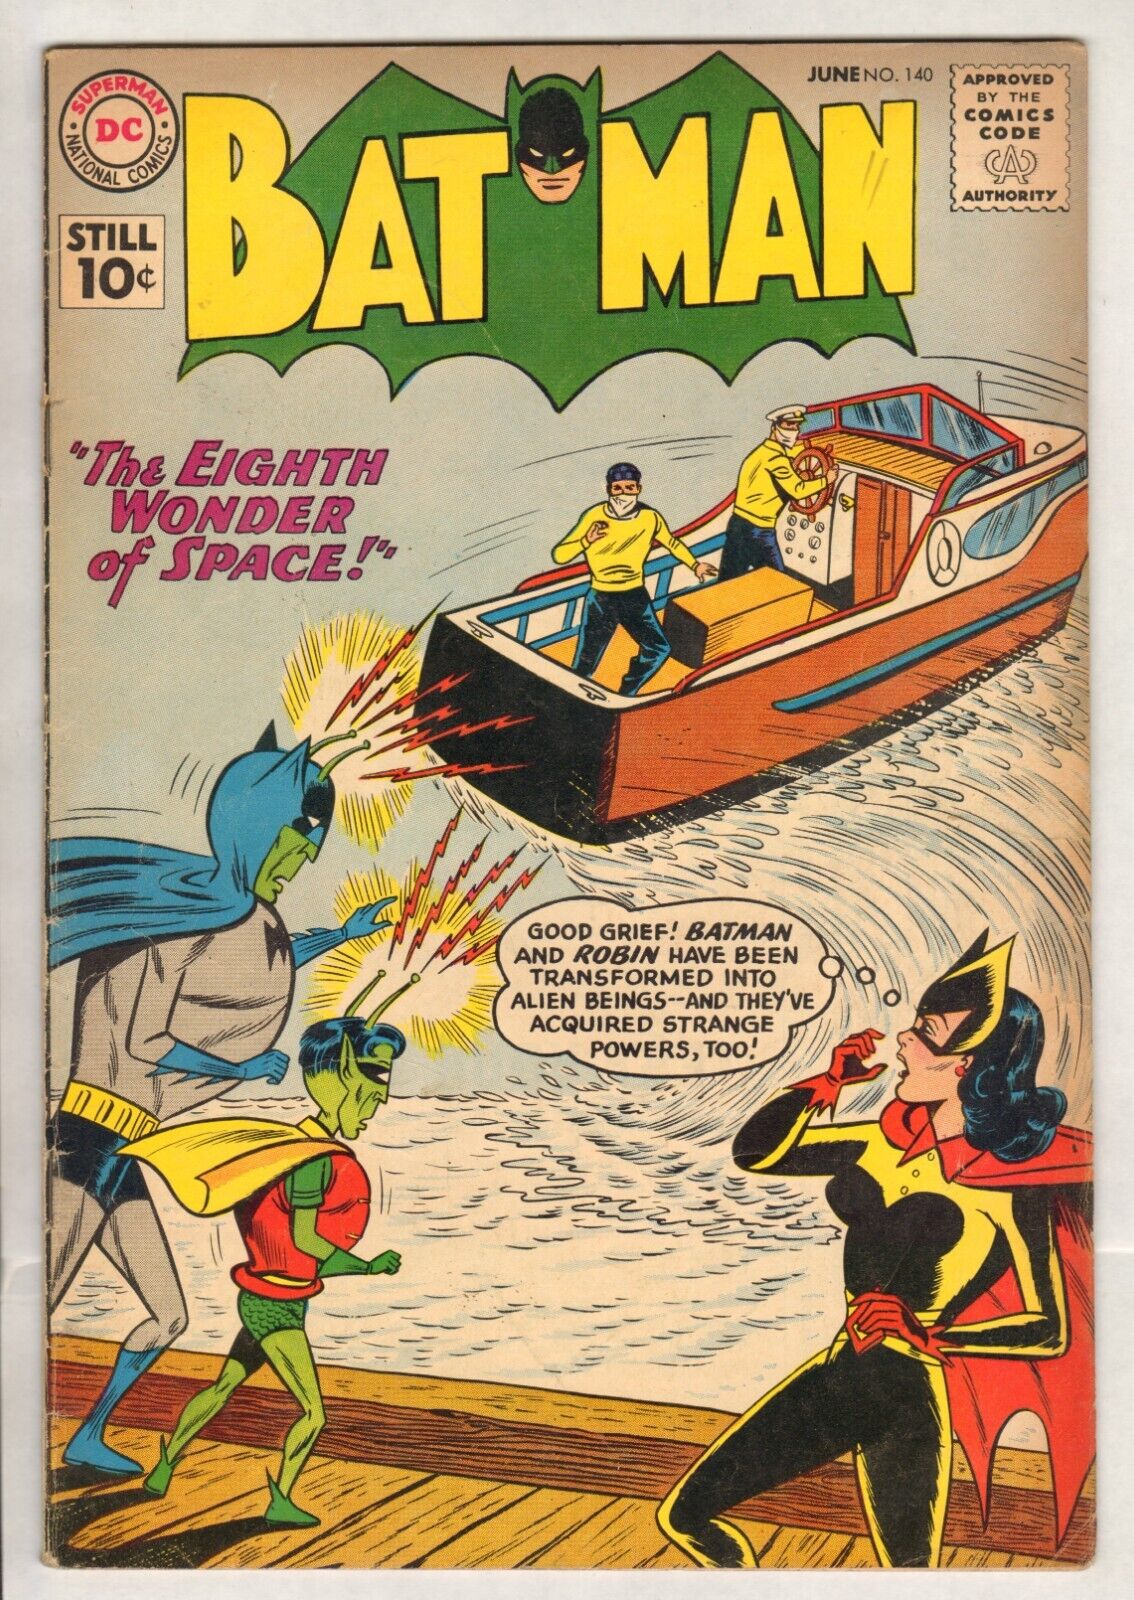 Batman #140 (FN) (1961, DC) Joker! Batowman!